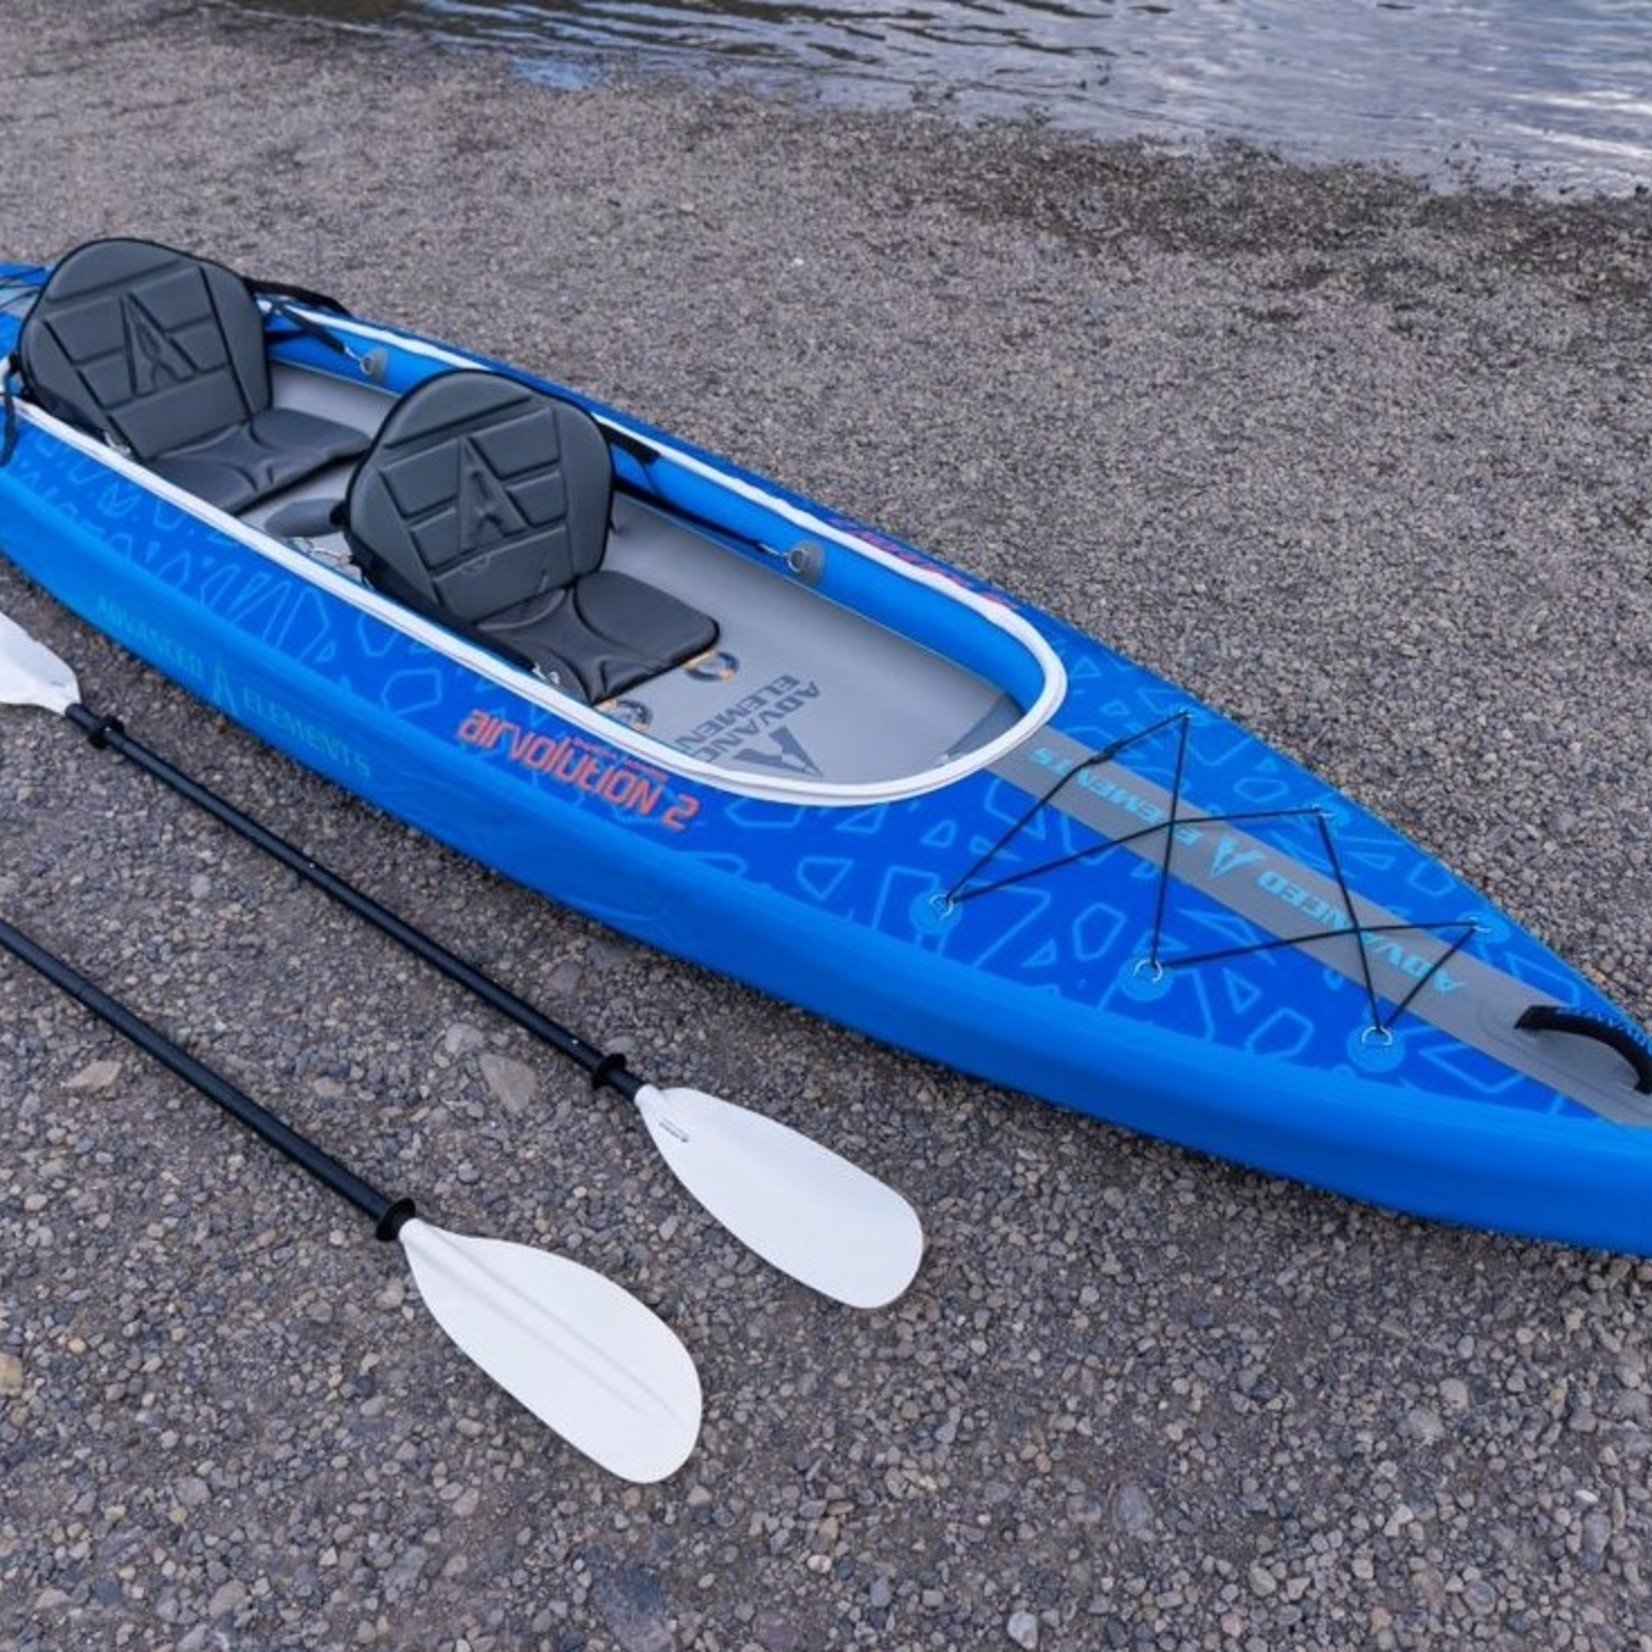 SkiBig3 Advanced Elements - Airvolution 2 Double Kayak